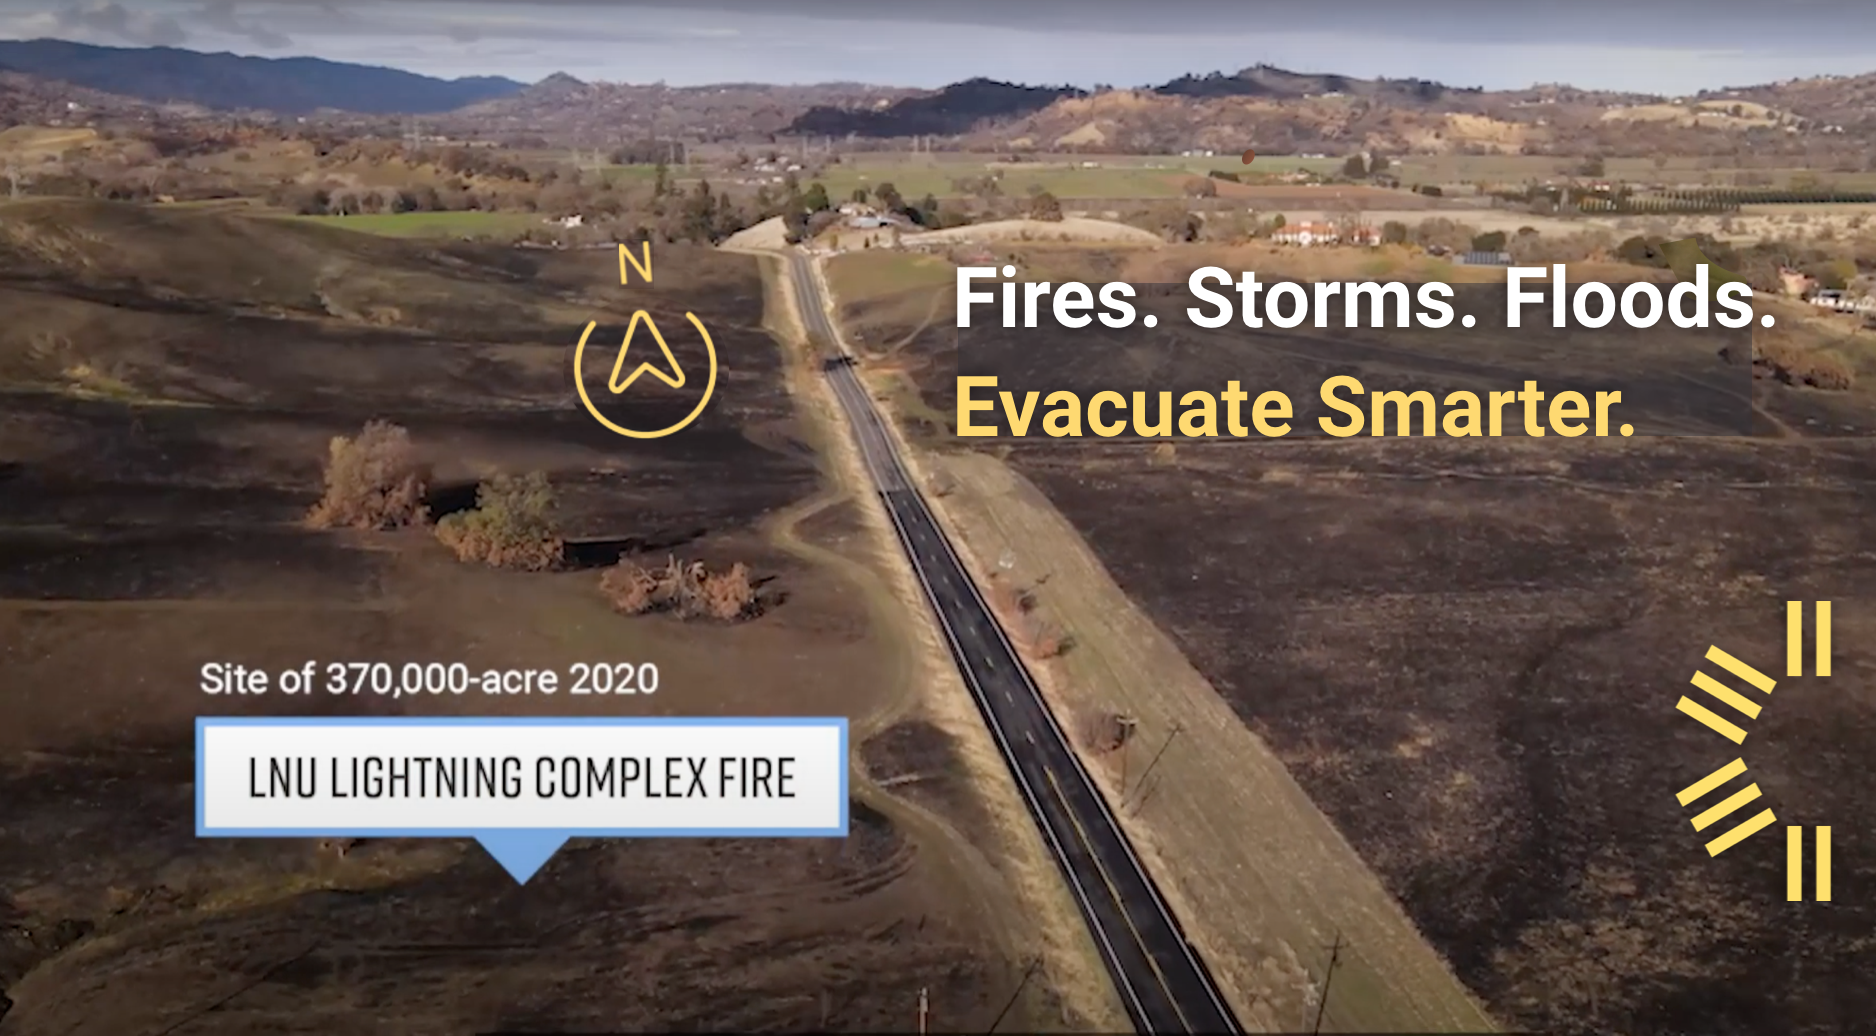 LNU Lightning Complex Fire Evacuation Map Video